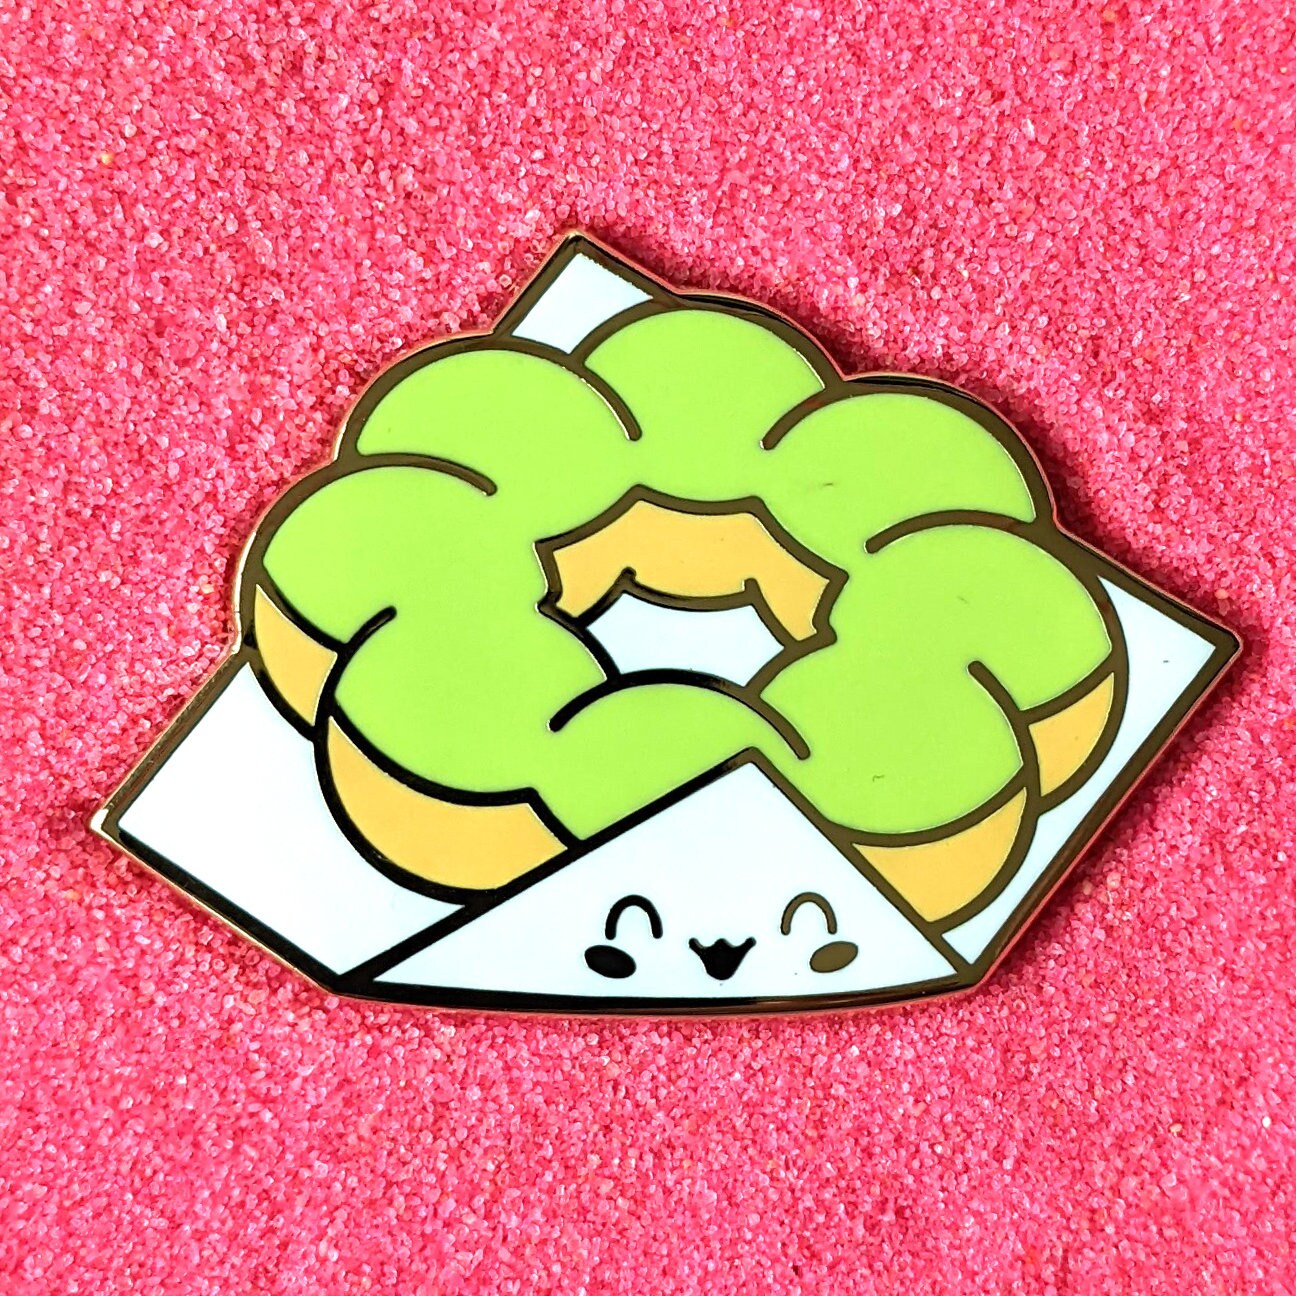 Green Tea Macha Frosted Mochi Donut - 1.5" Enamel Pin Lapel Metal Badge